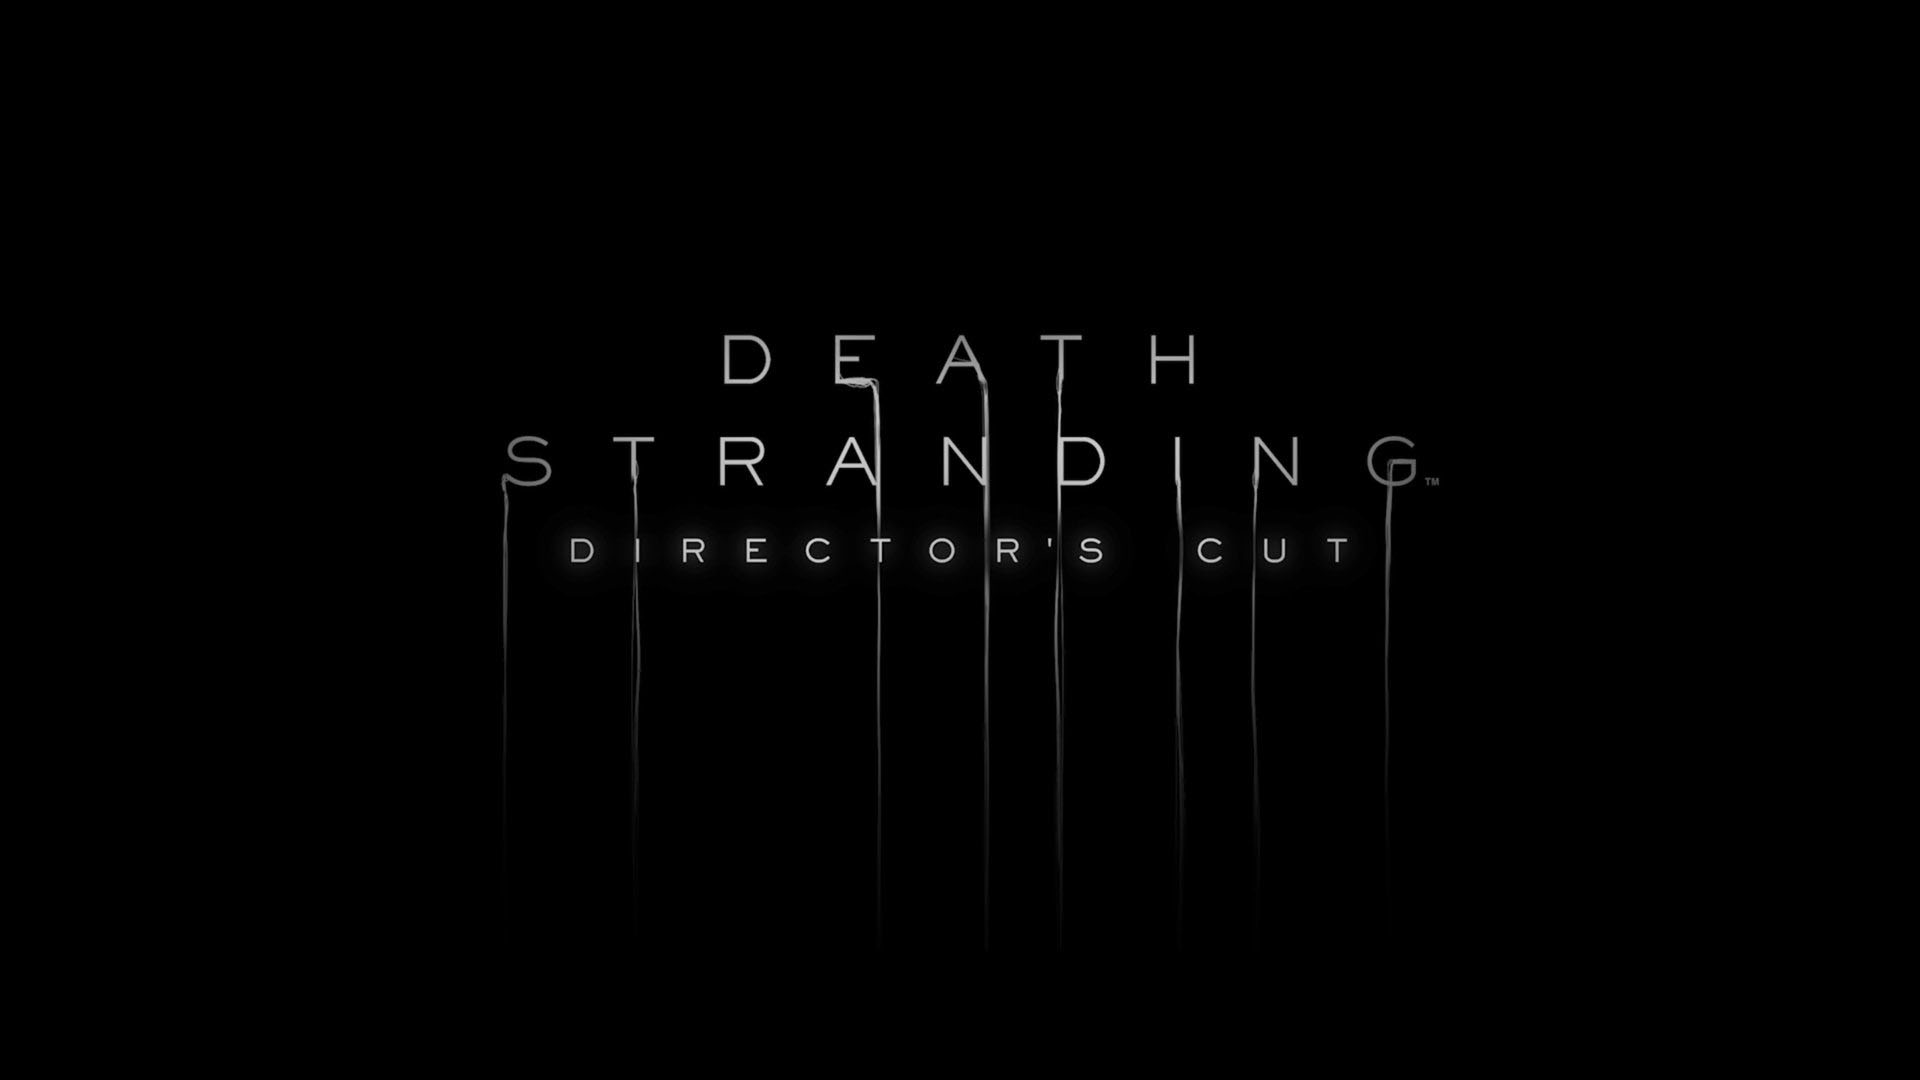 Death Stranding-regisseurs Cut 06 10 21 1